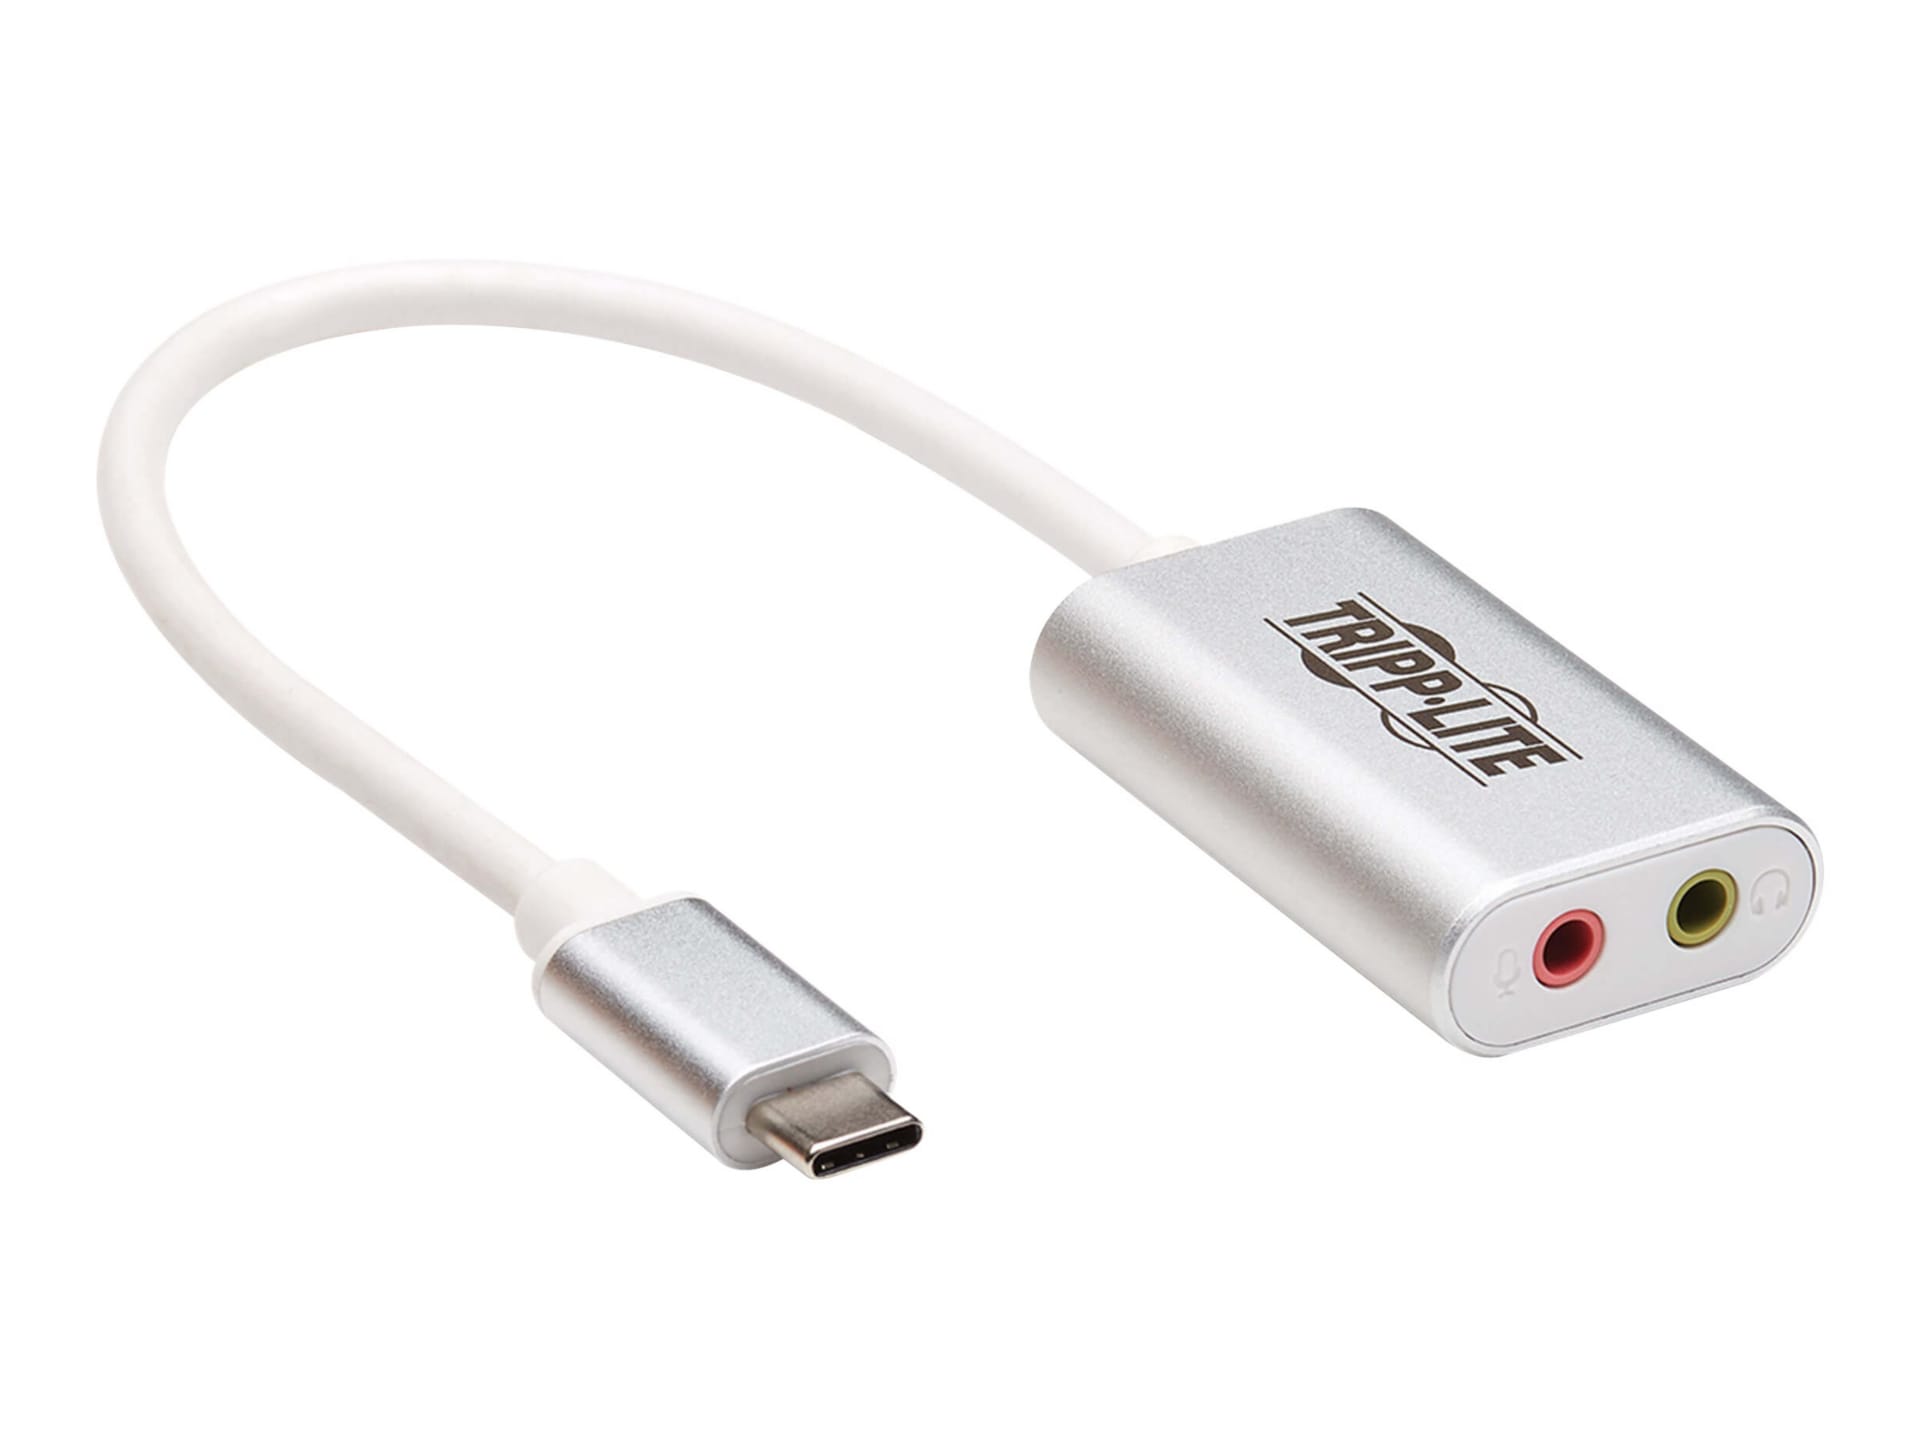 Eaton Tripp Lite Series USB C to 3.5mm Stero Audio Adapter for Microphone Headphones - USB-C to headphone jack adapter -